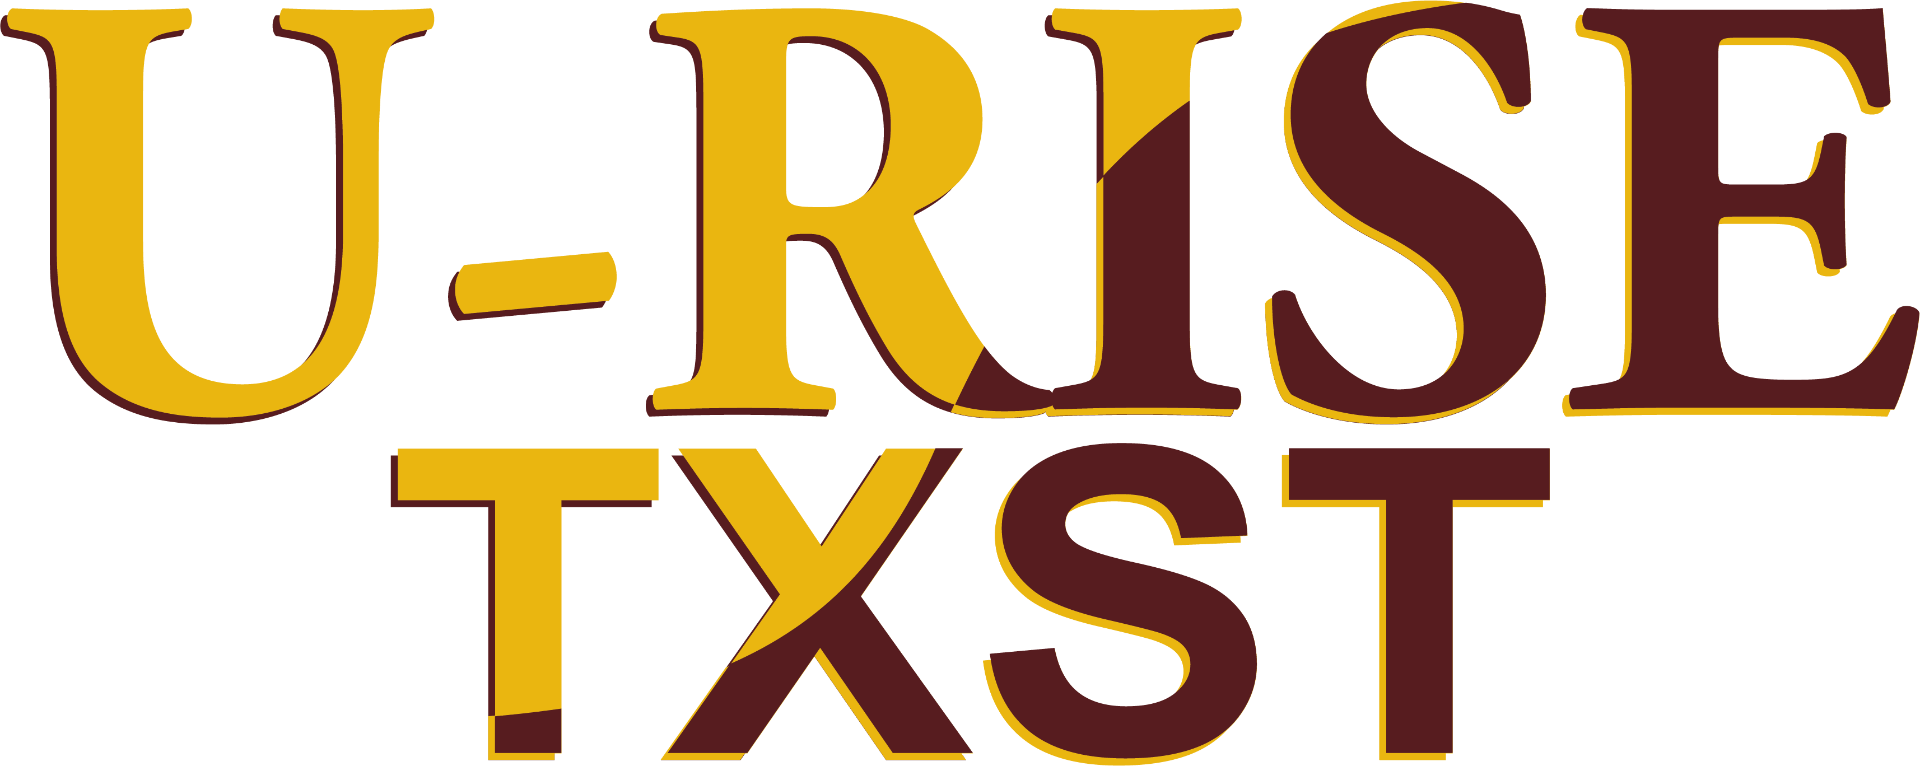 Texas State University U-RISE